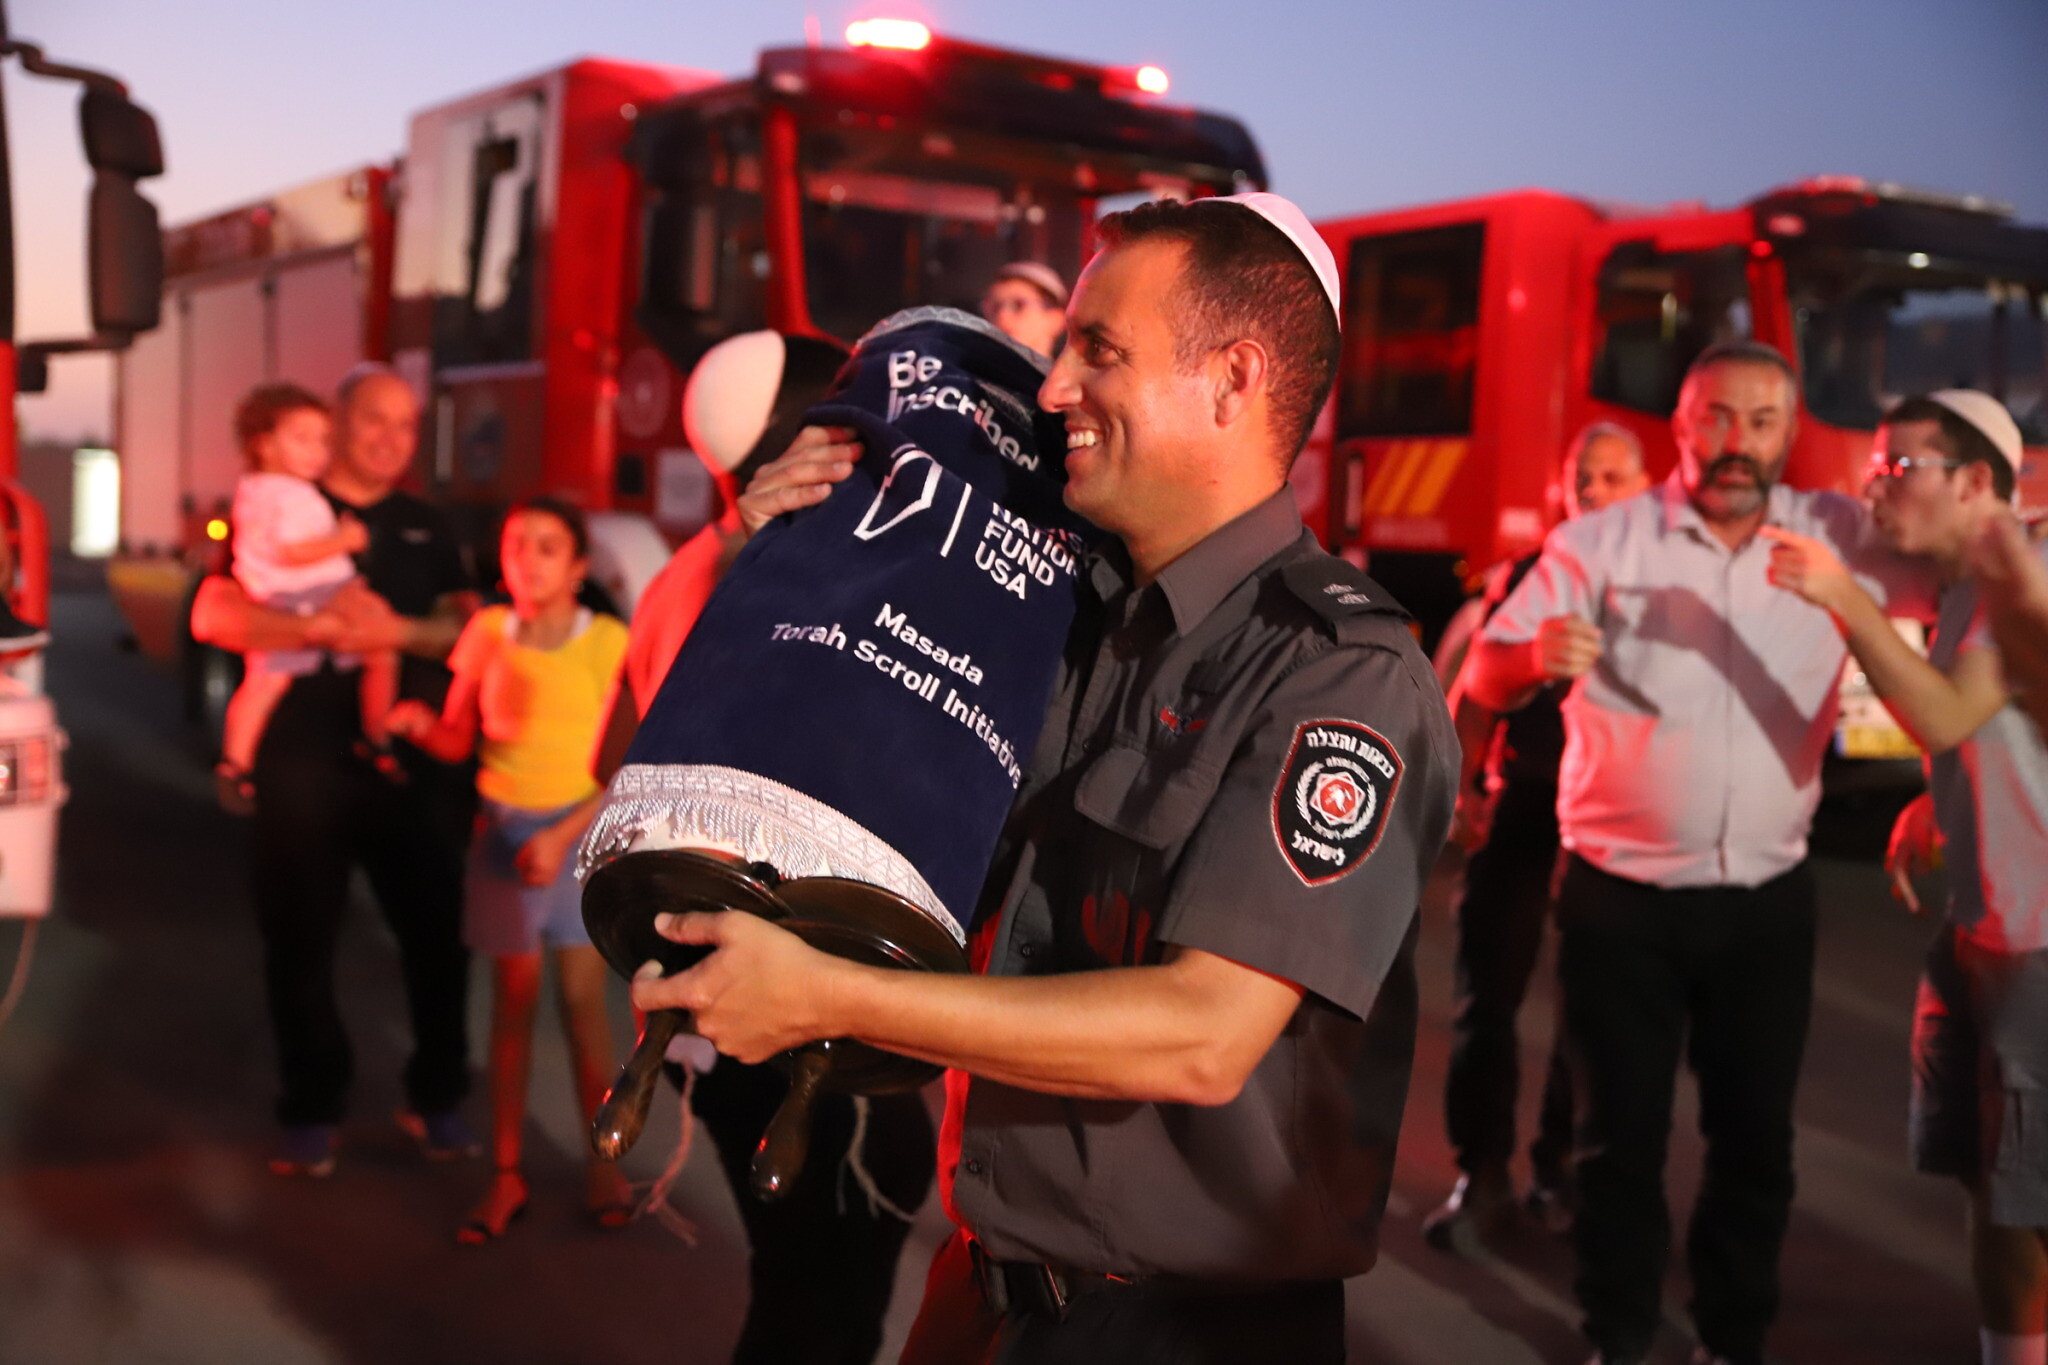 Israeli fire fighters recieve a Torah from Jewish National Fund-USA